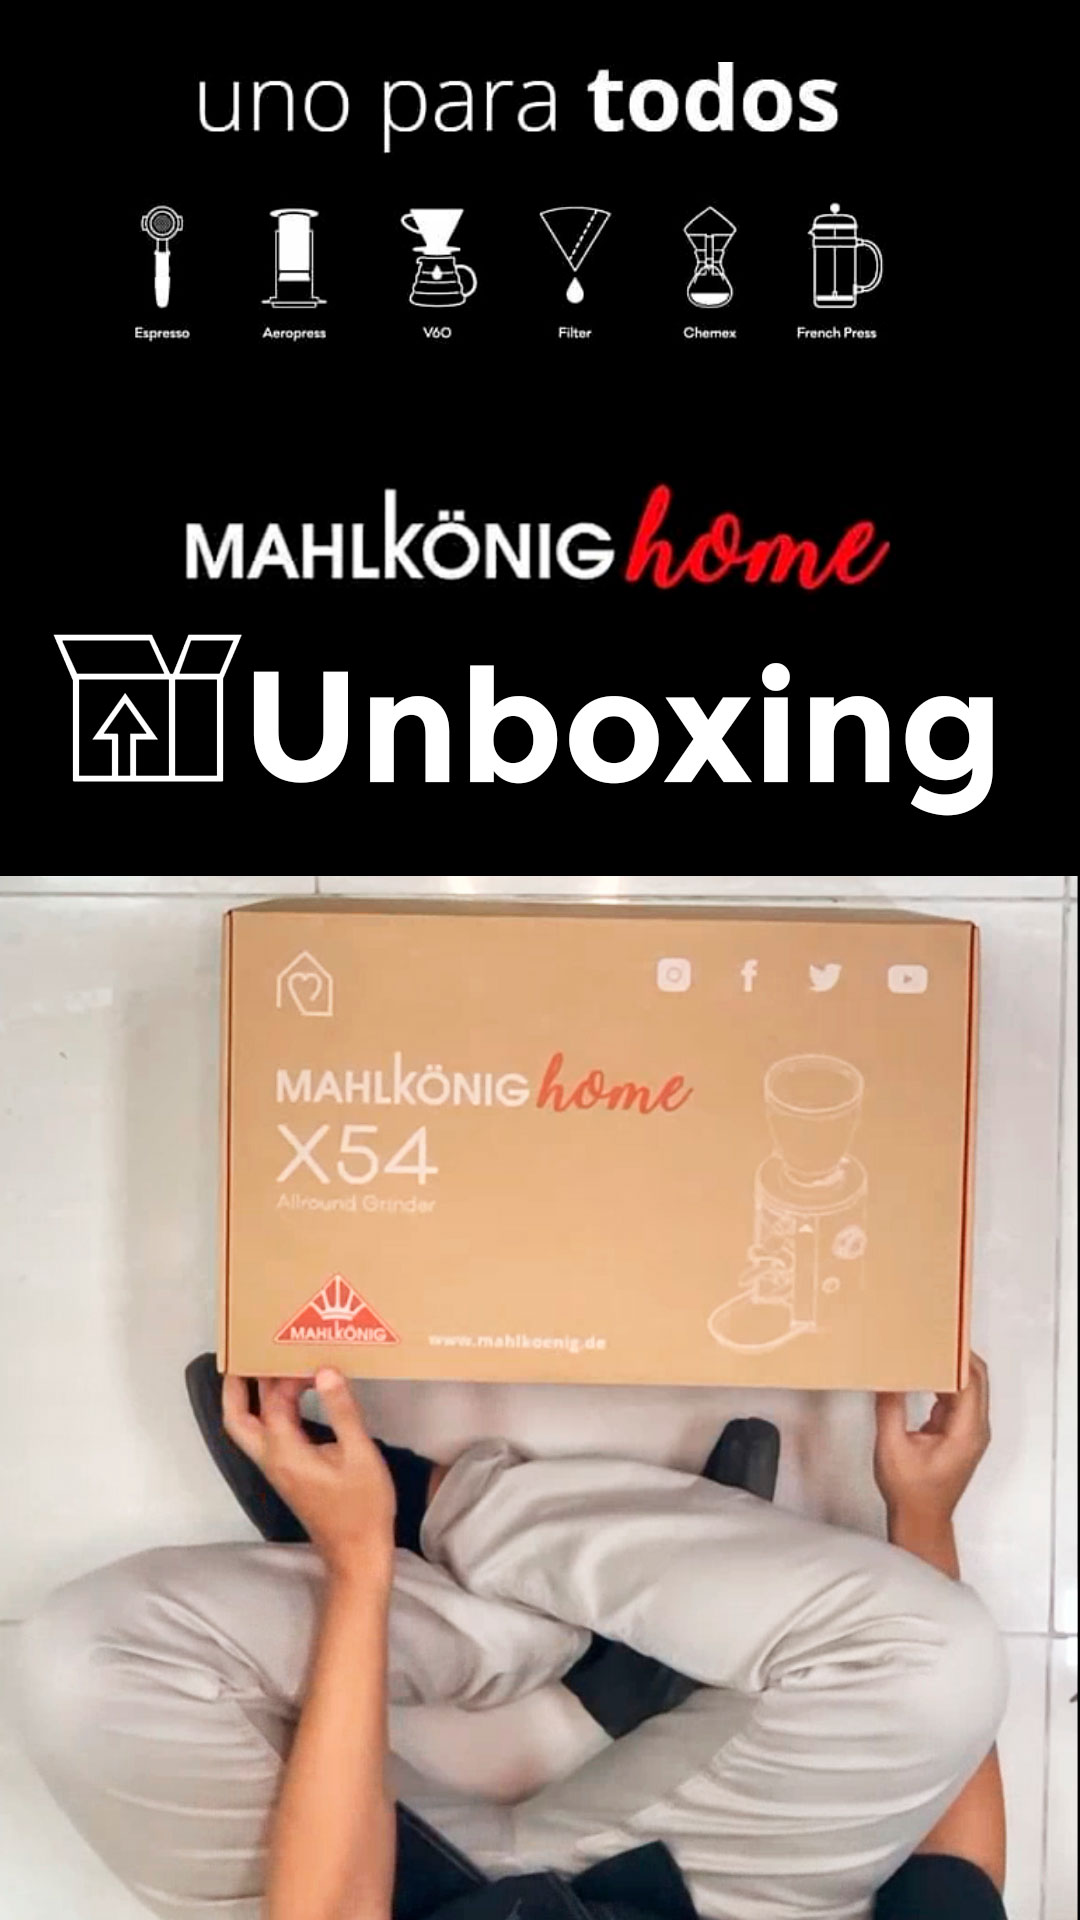 mahlkonig-home-presentacion-panama-unboxing